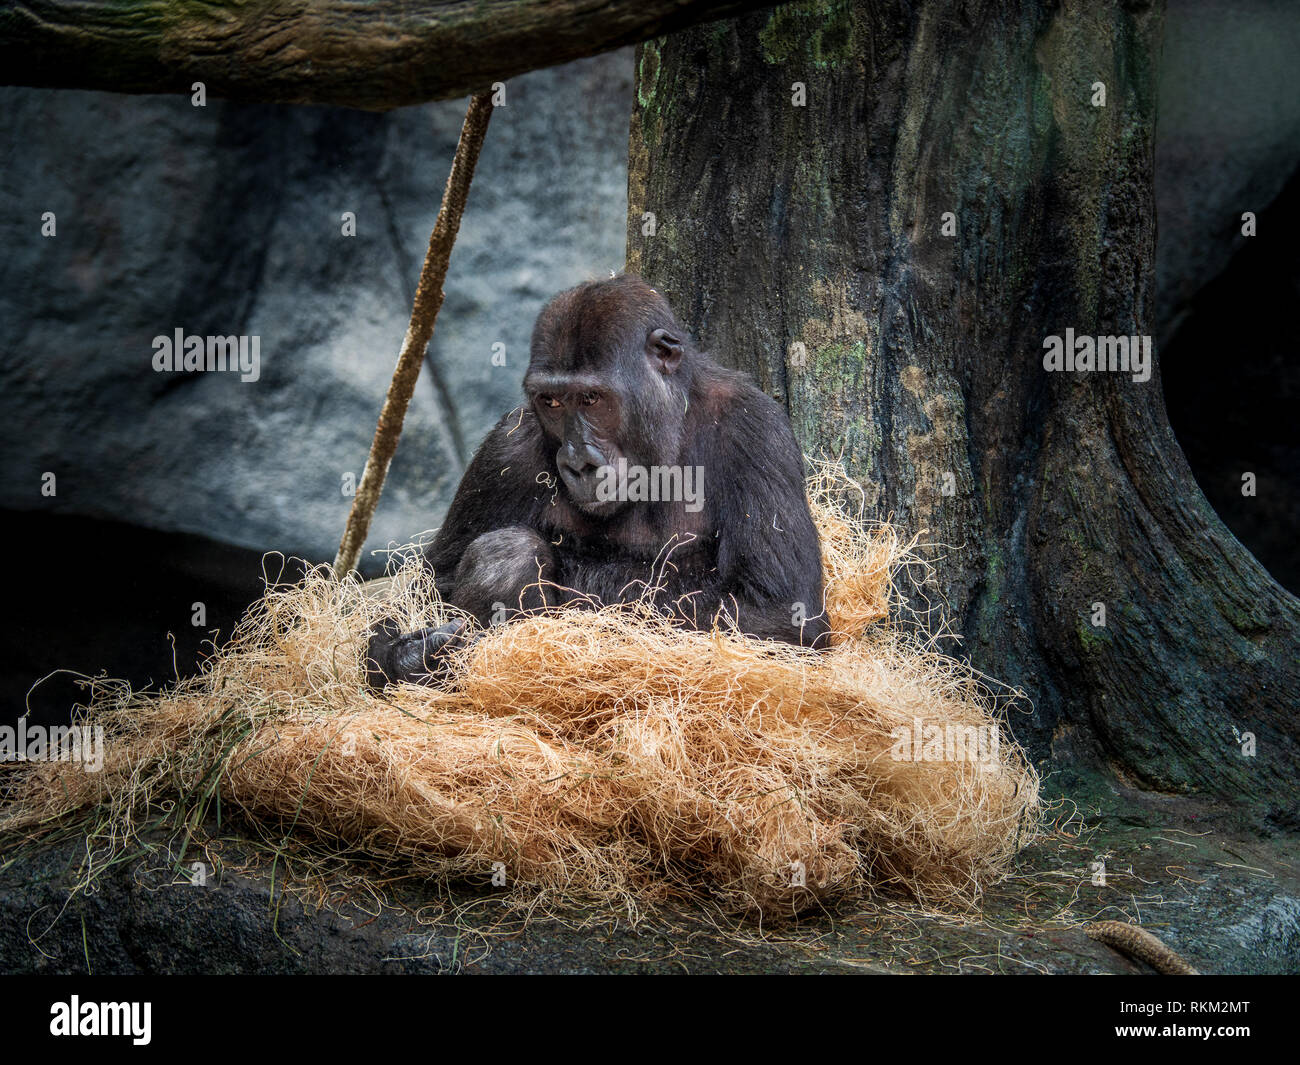 Gorilla with child Stock Photo